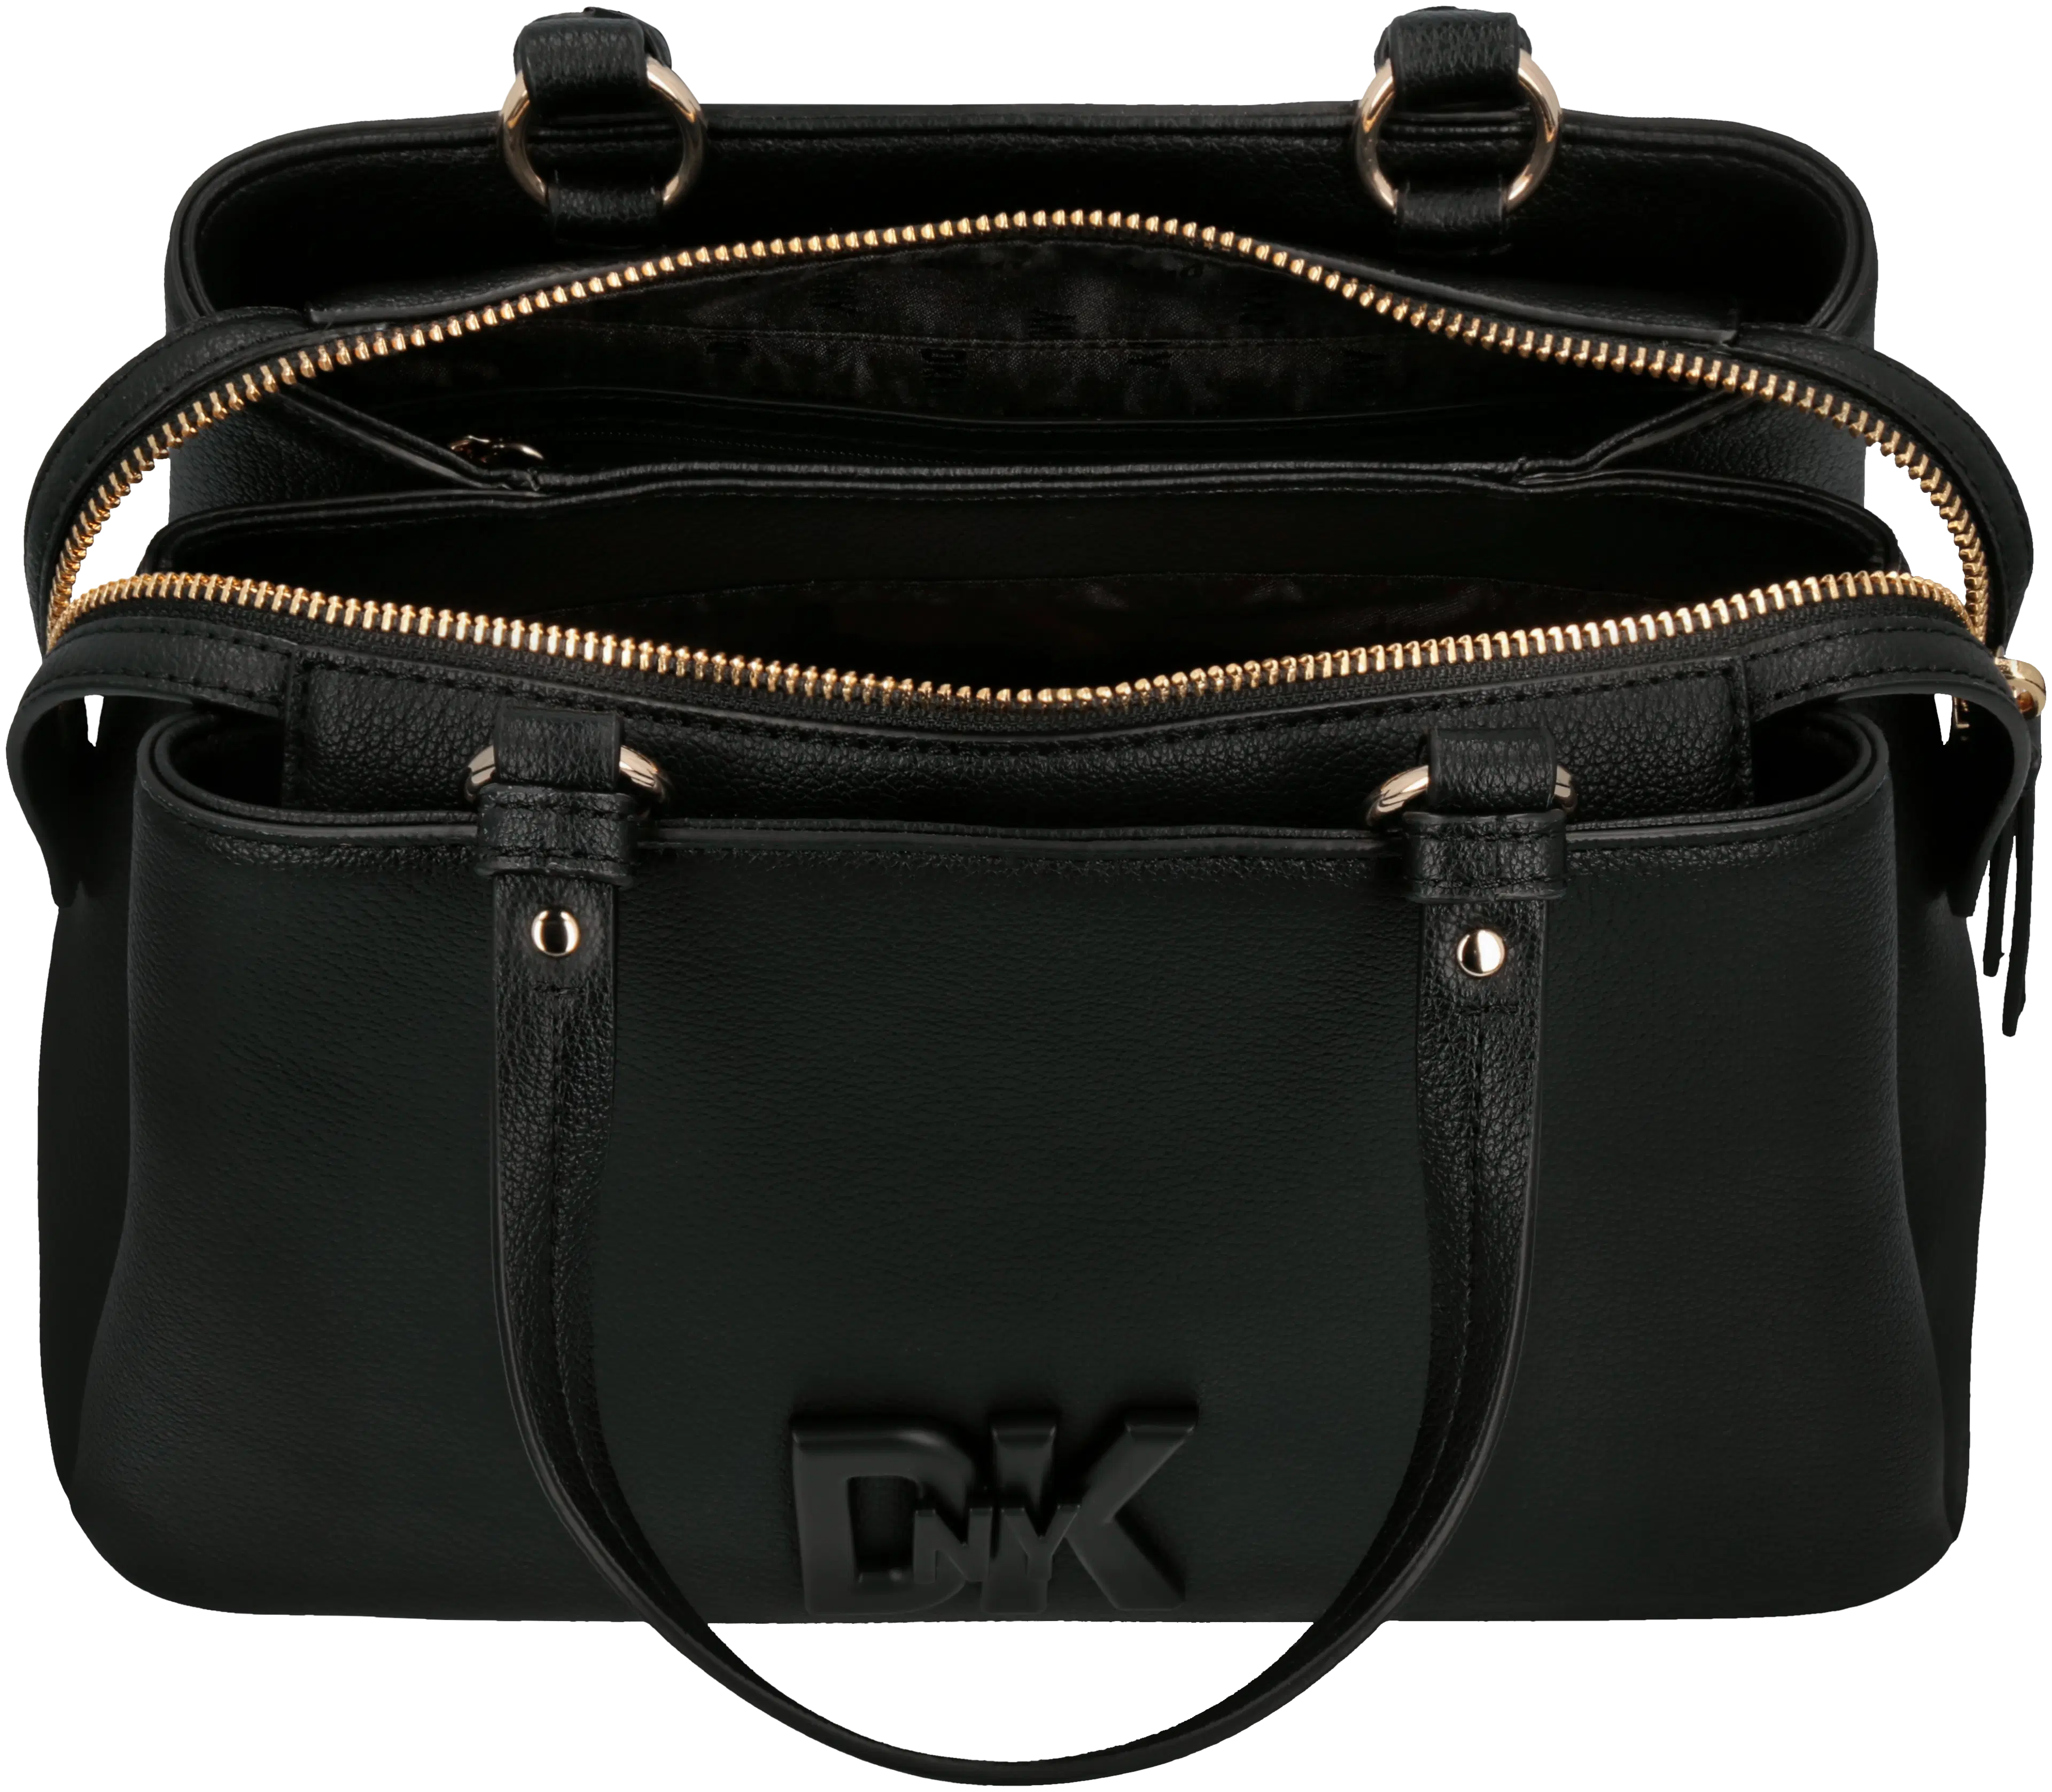 DKNY Seventh Avenue M satchel käsilaukku